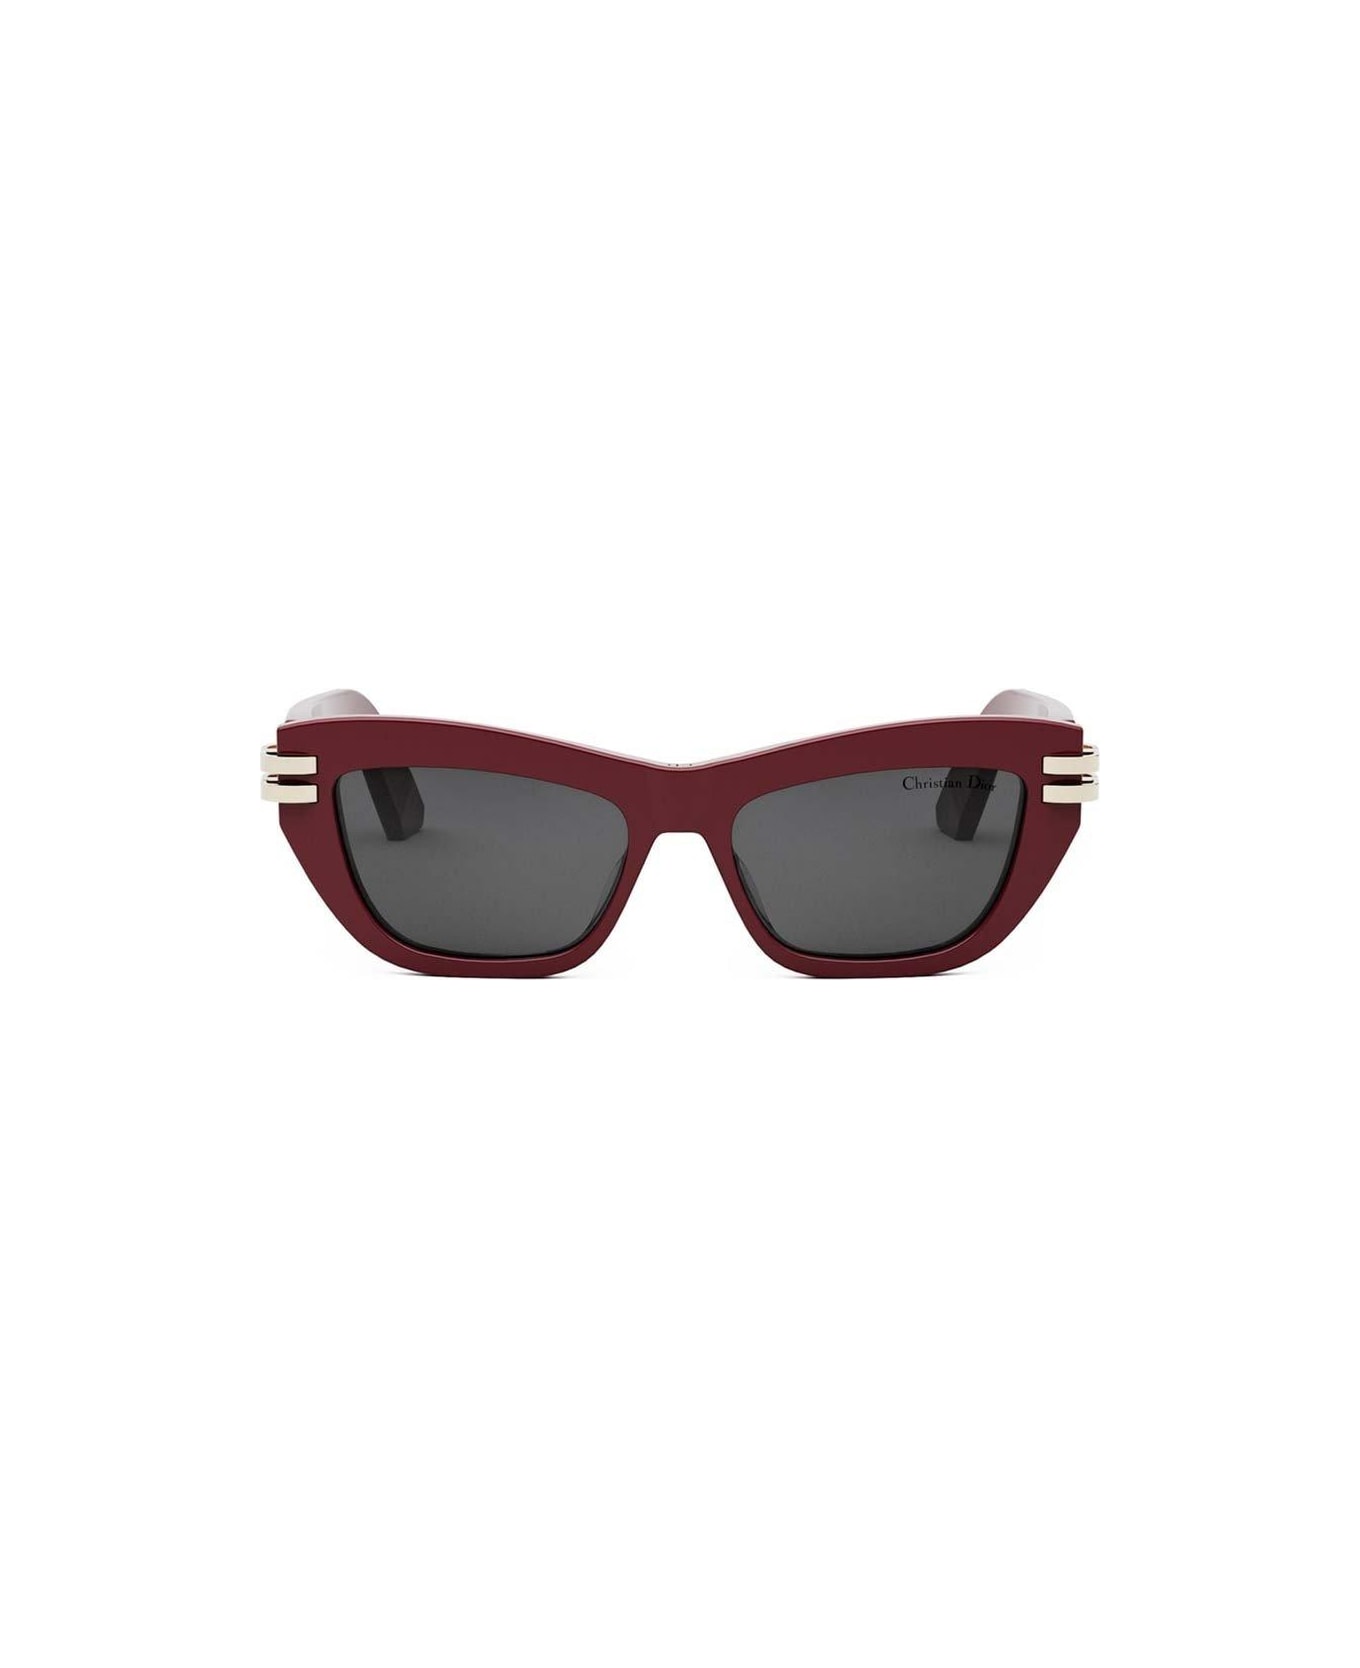 Dior Eyewear Butterfly Frame Sunglasses - 35a0 サングラス